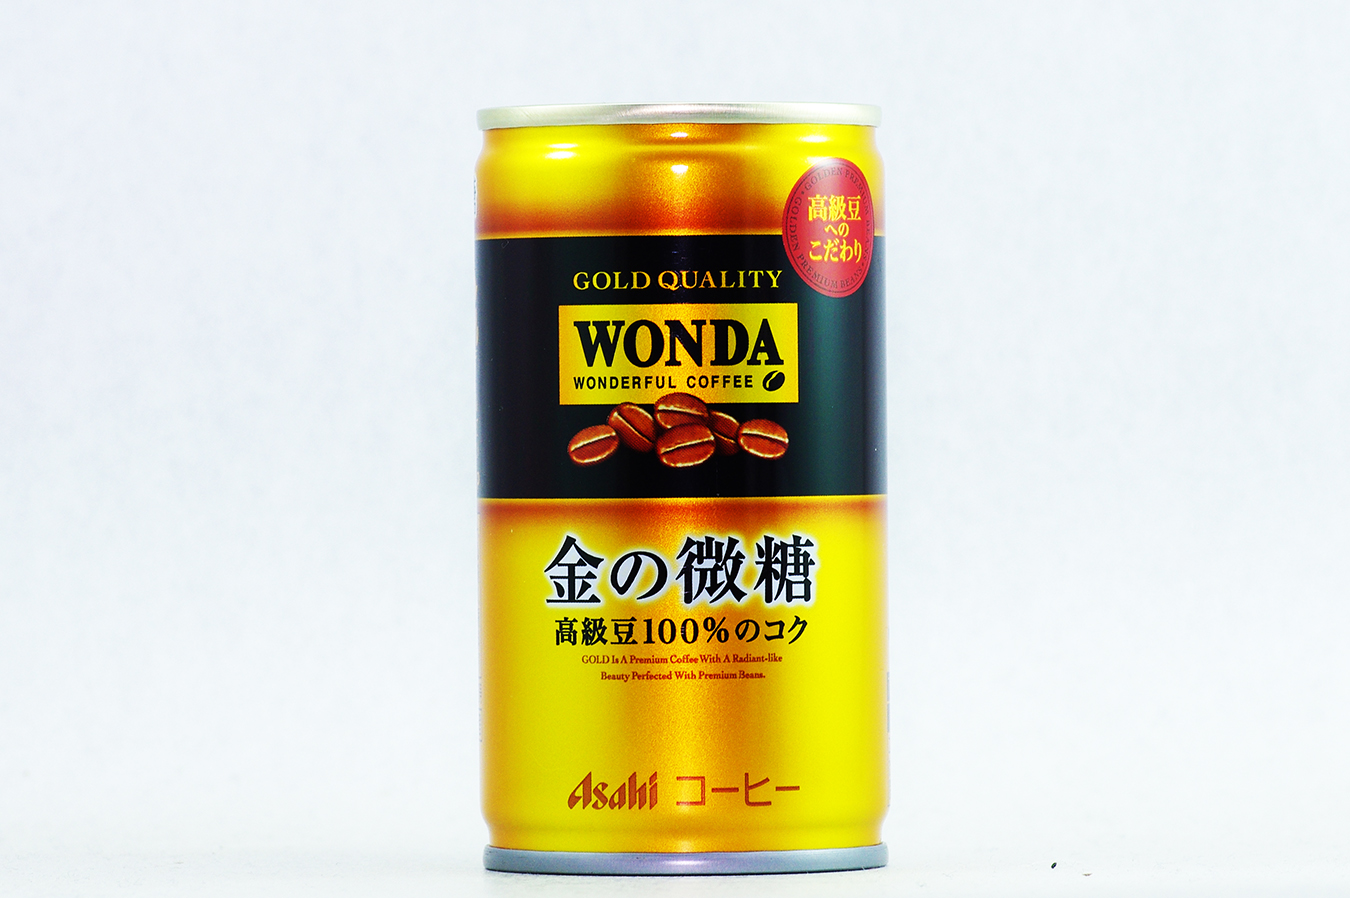 WONDA 金の微糖 165g缶 2018年5月